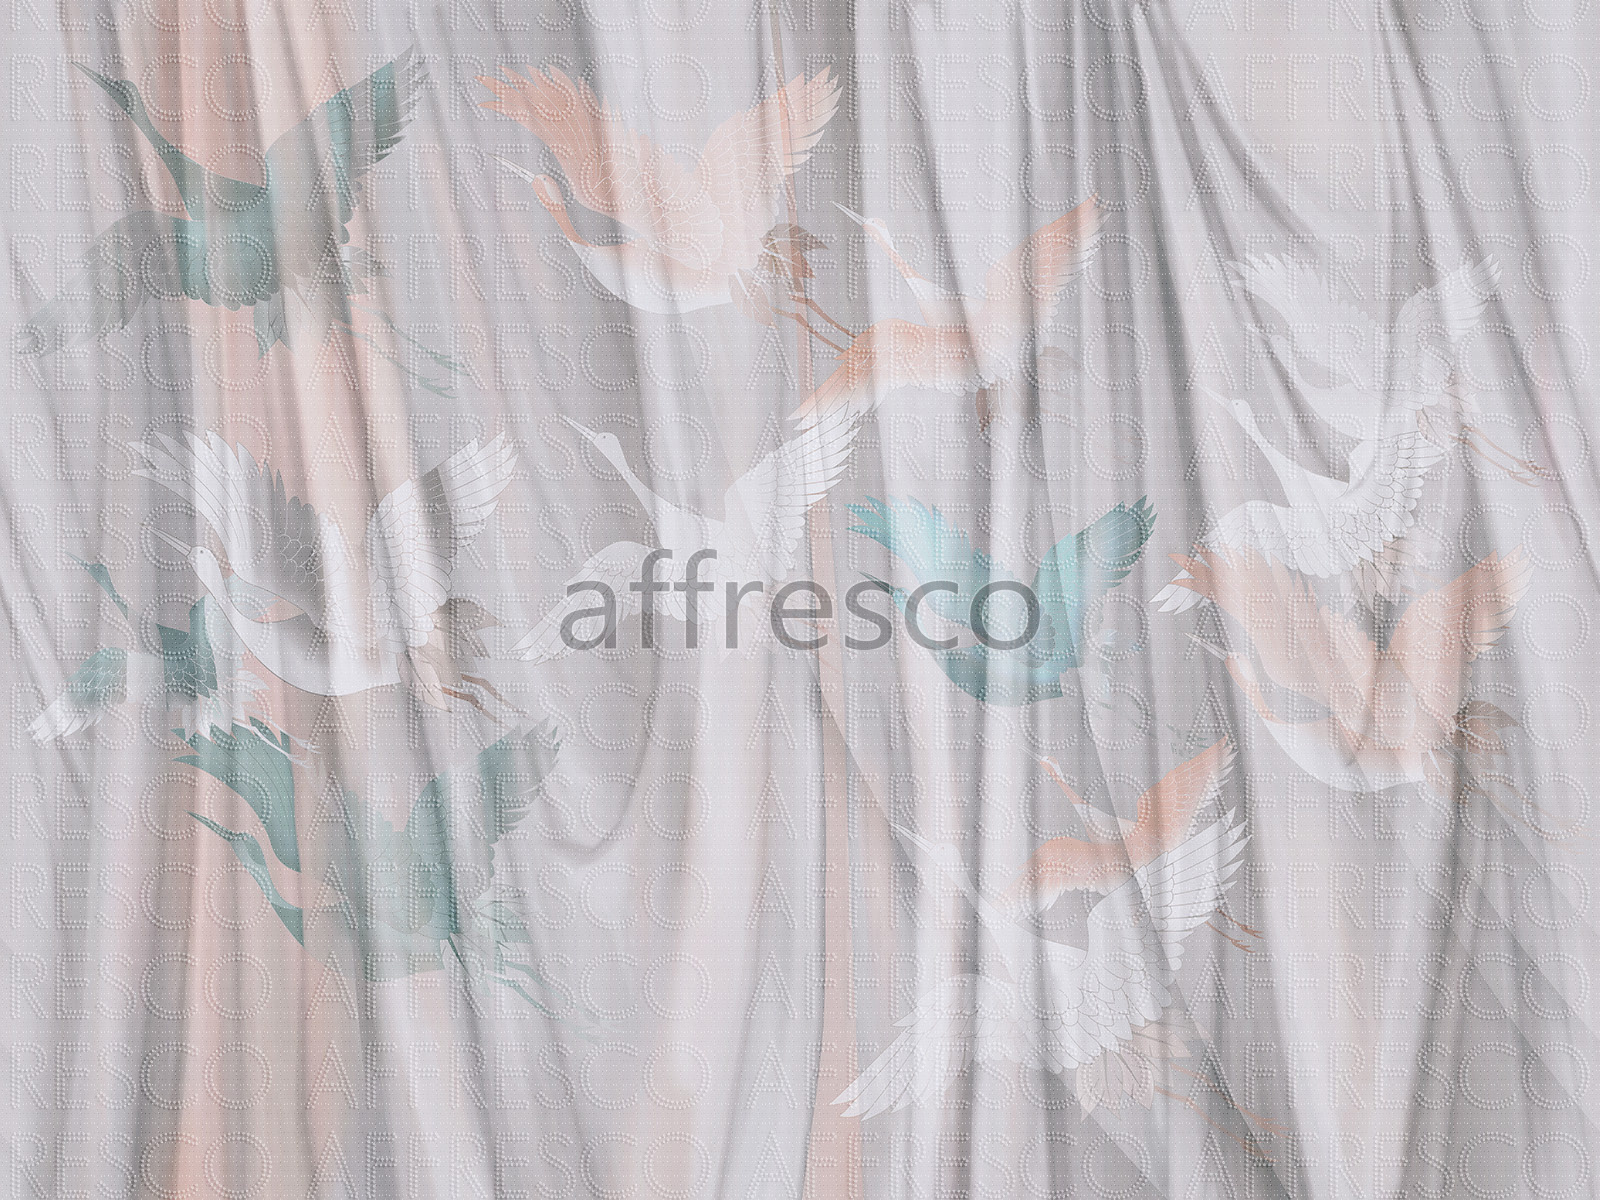 RE936-COL1 | Fine Art | Affresco Factory